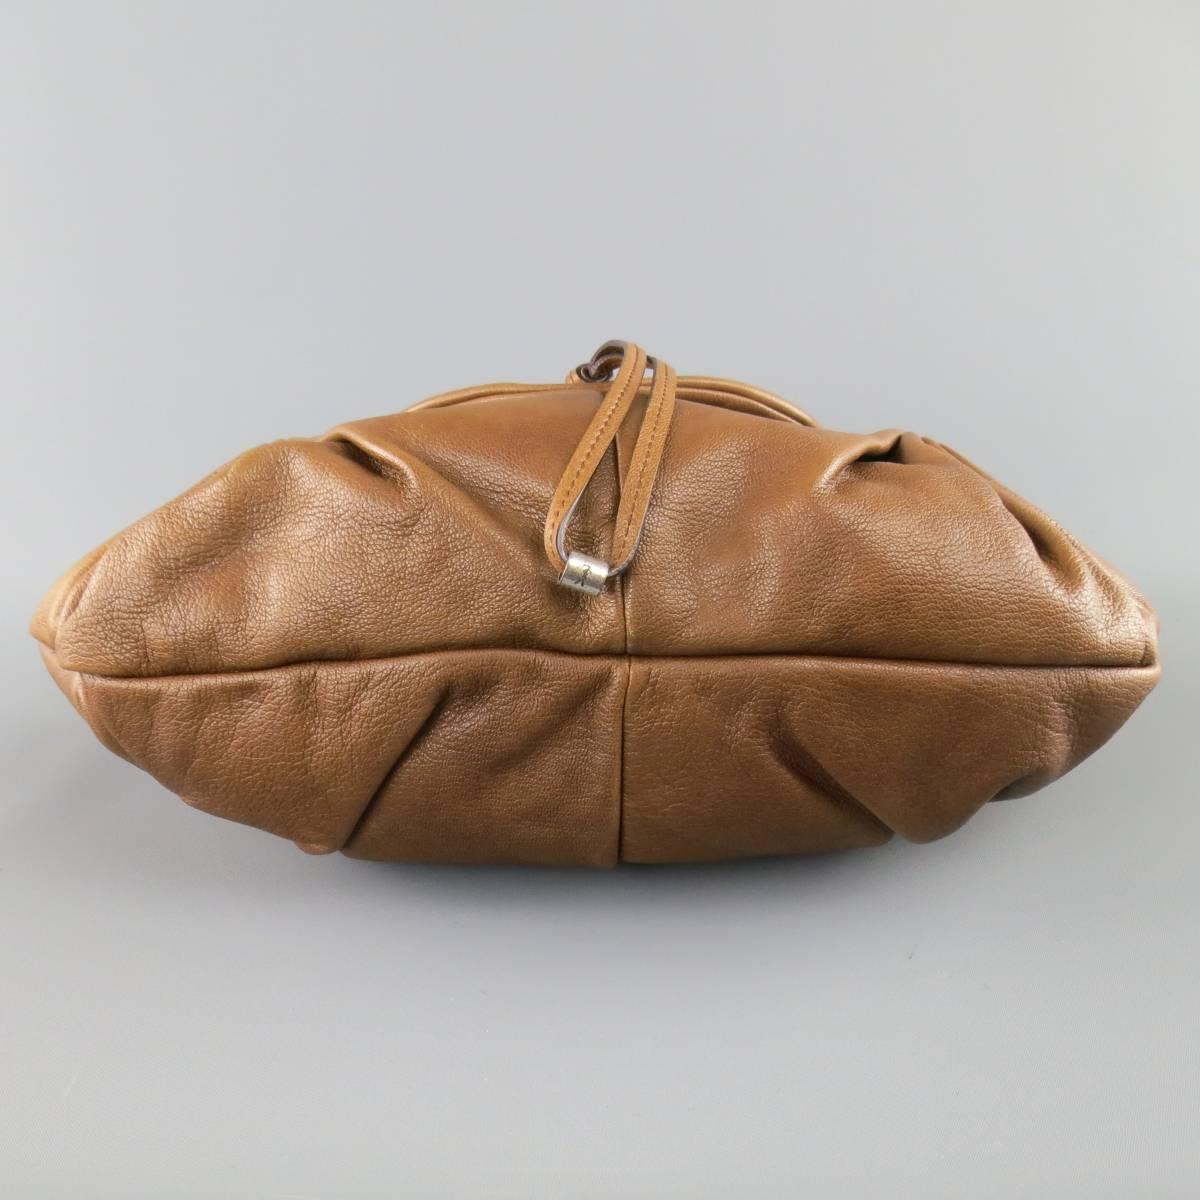 YVES SAINT LAURENT by TOM FORD 2003 Brown Leather Gathered Shoulder Bag 2